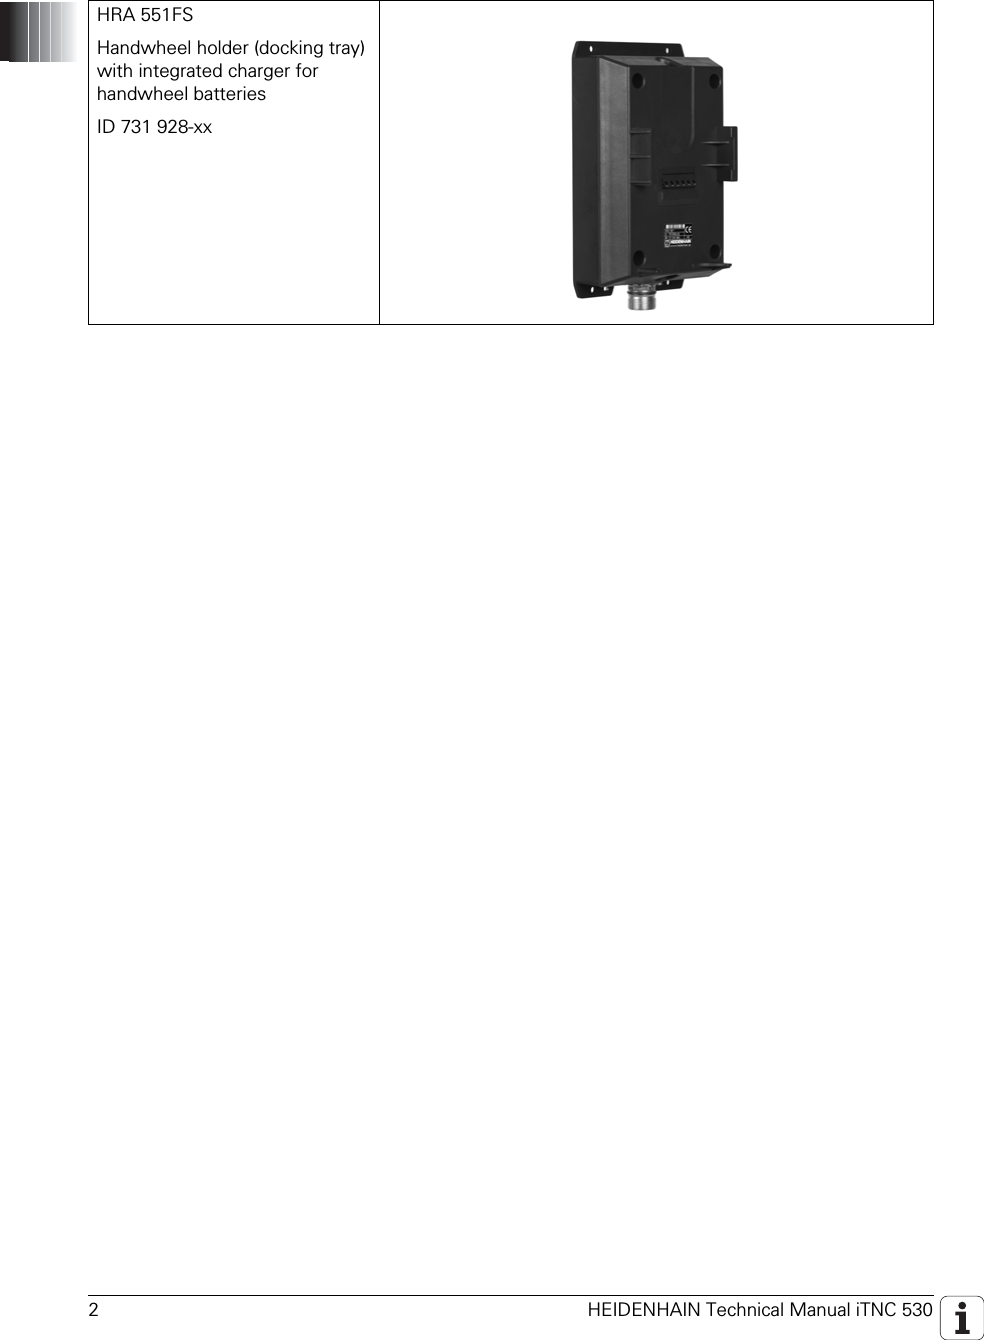 2 HEIDENHAIN Technical Manual iTNC 530HRA 551FSHandwheel holder (docking tray) with integrated charger for handwheel batteriesID 731 928-xx